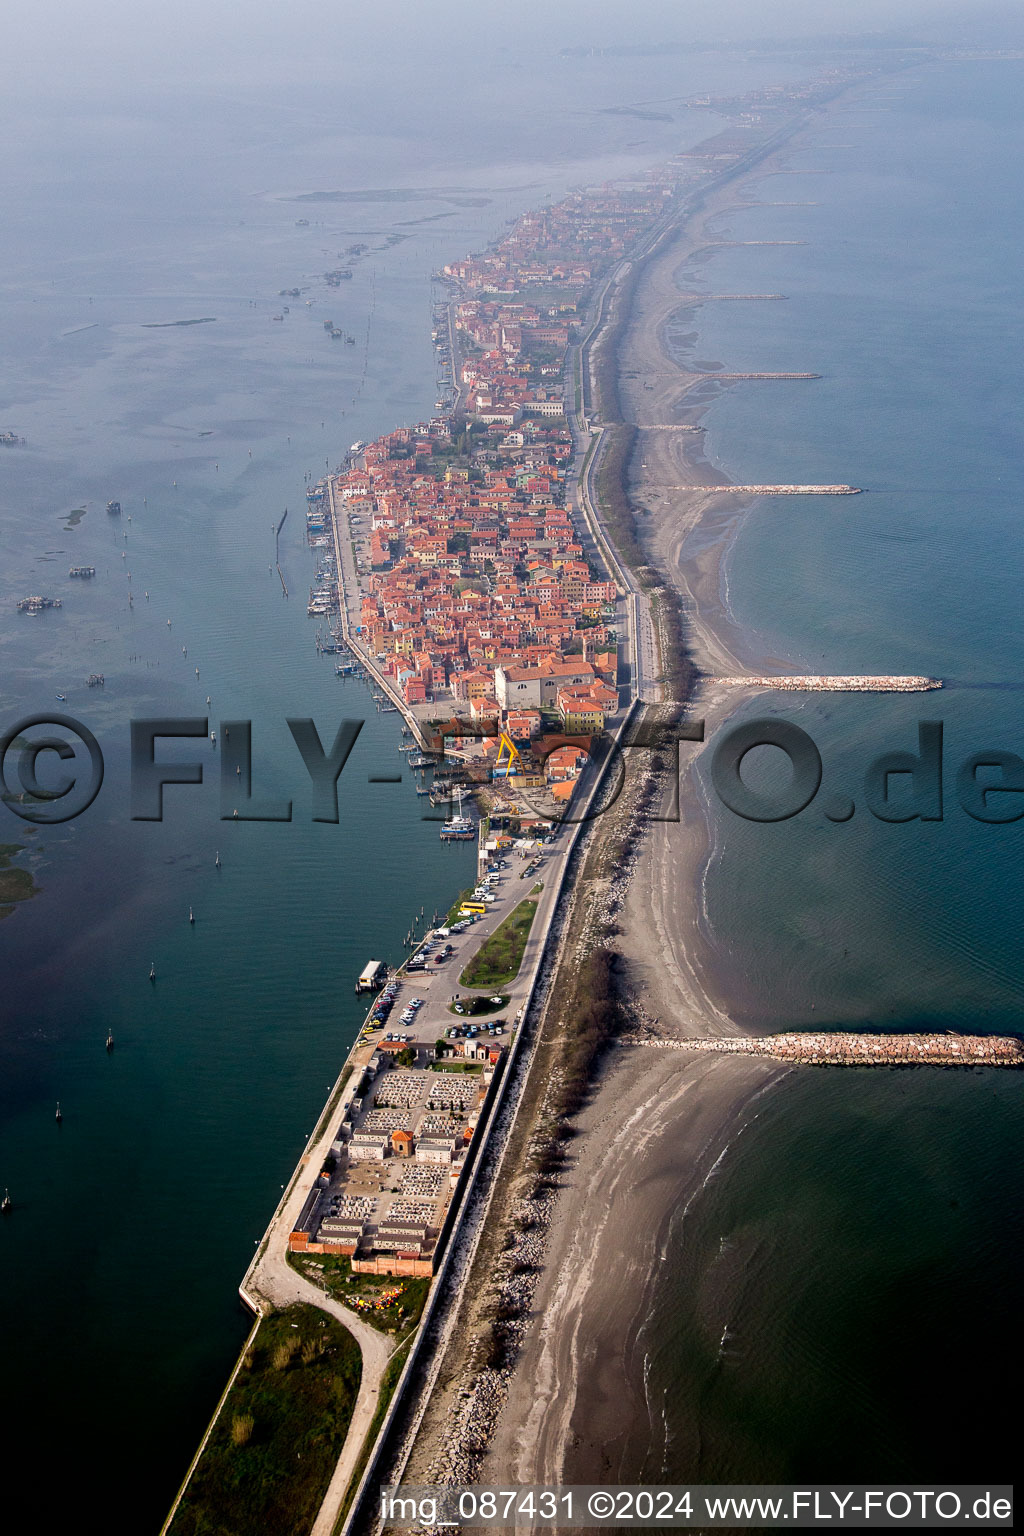 Aerial view of Settlement area in the district Pellestrina in Venedig in Venetien, Italy